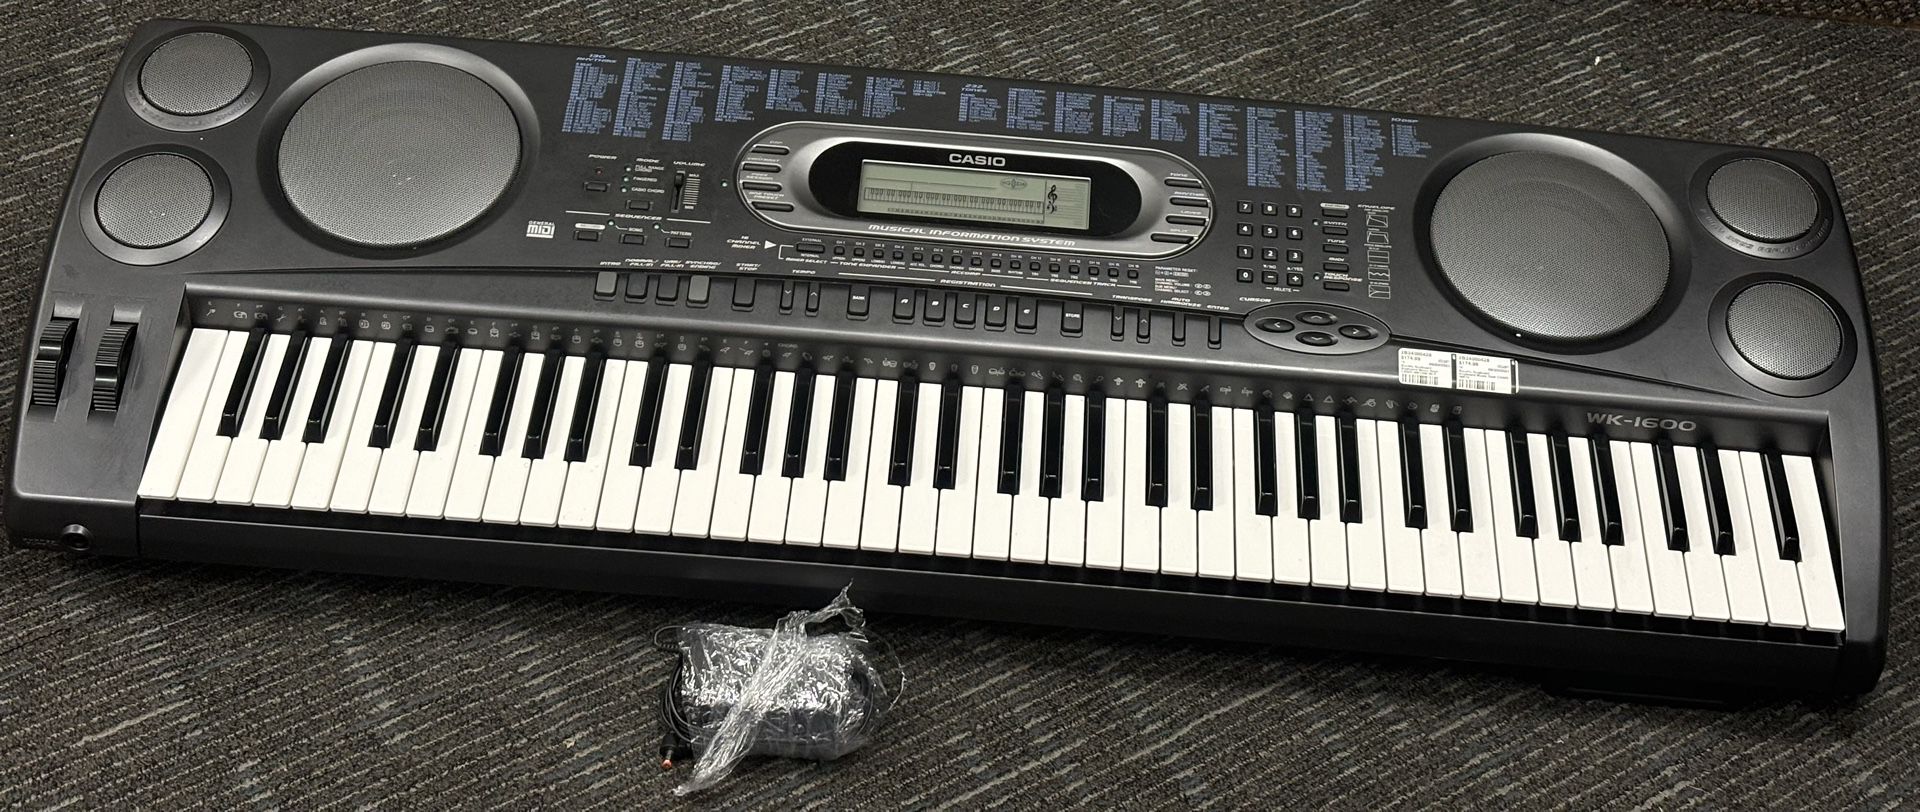 Casio Wk-1600 76 Key Keyboard Synthesizer